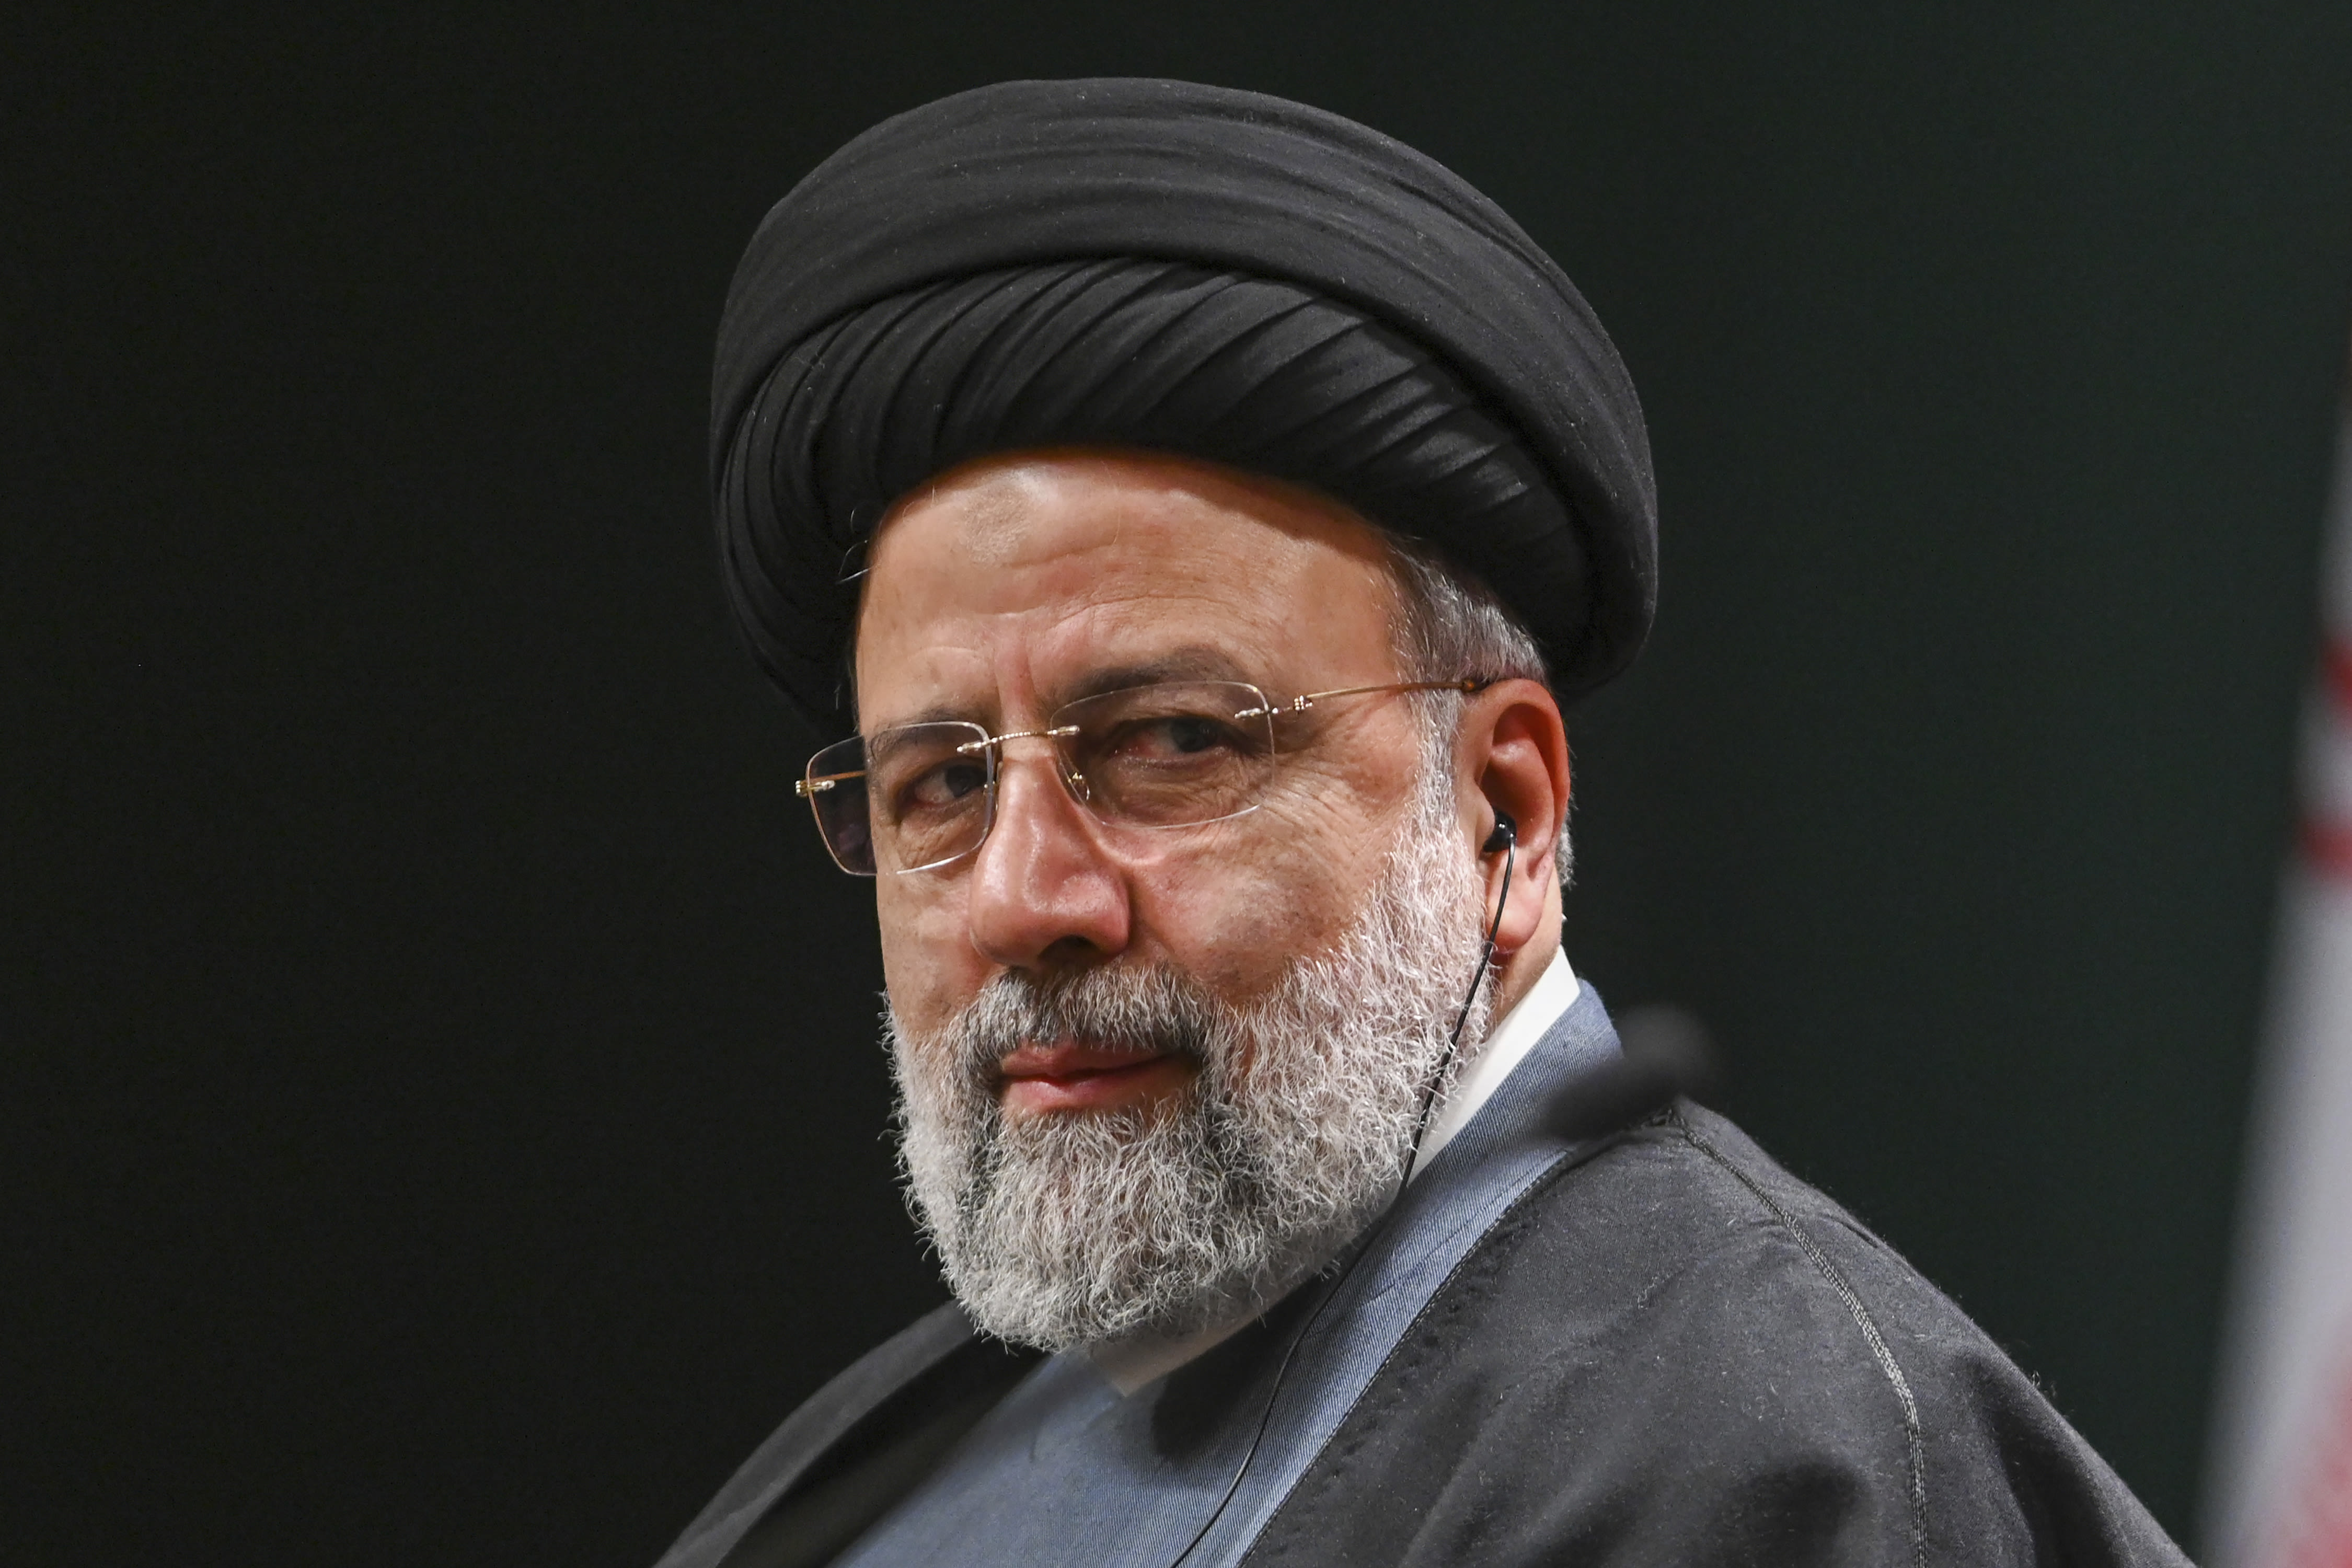 Iran President Ebrahim Raisi, supreme leader's protégé, dies at 63 in helicopter crash